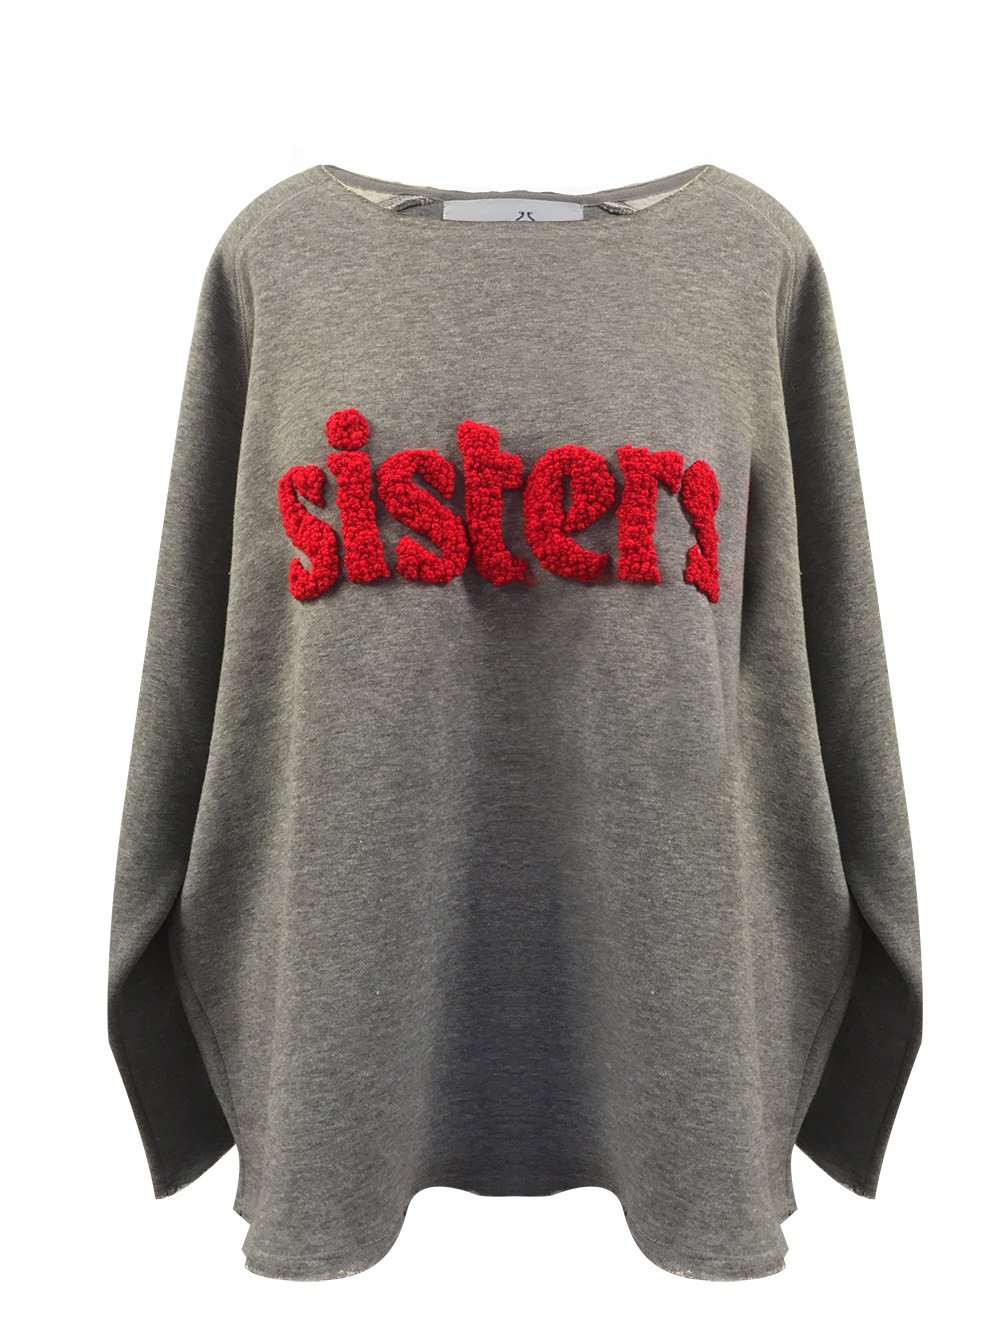 Image of SISTERS Sweater Pre -Order in Grey or Black 